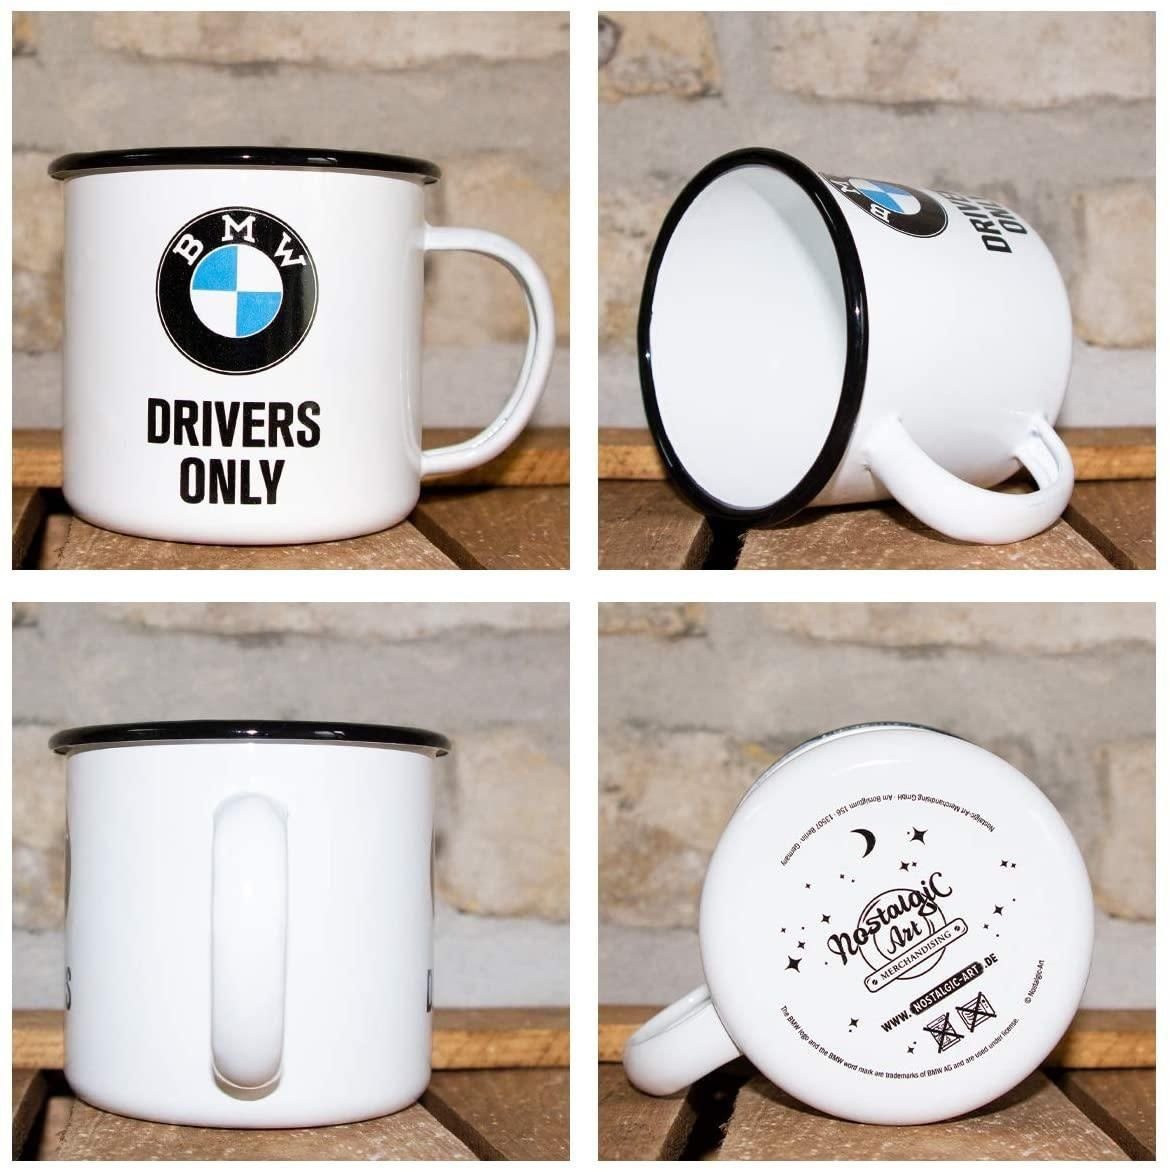 Emaille-Becher BMW - BMW Drivers - Only Tasse Nostalgic-Art